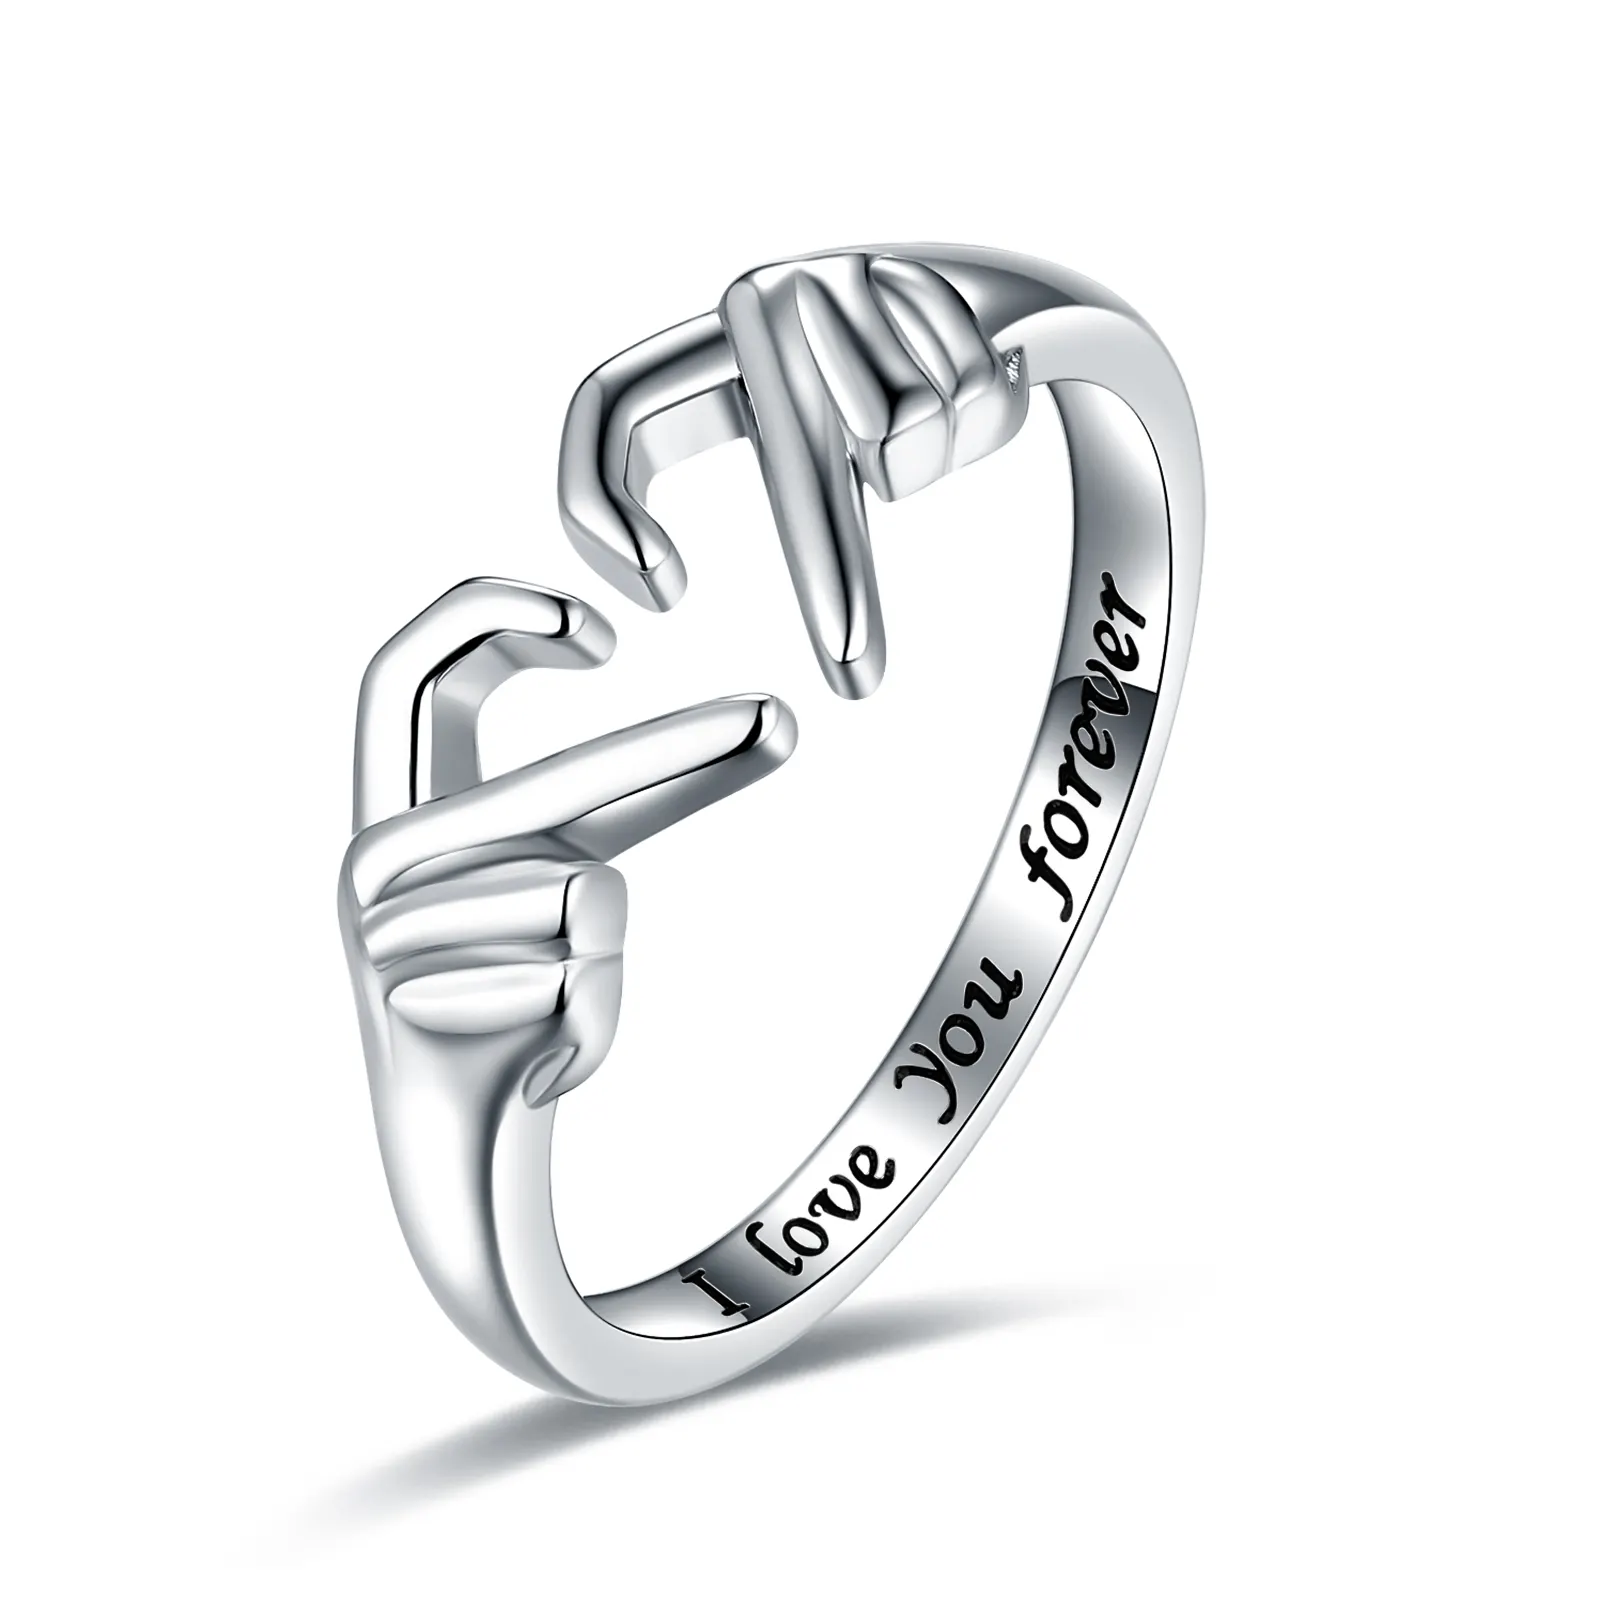 925 Sterling silver heart claddagh rings friendship jewelry love open rings for women friends